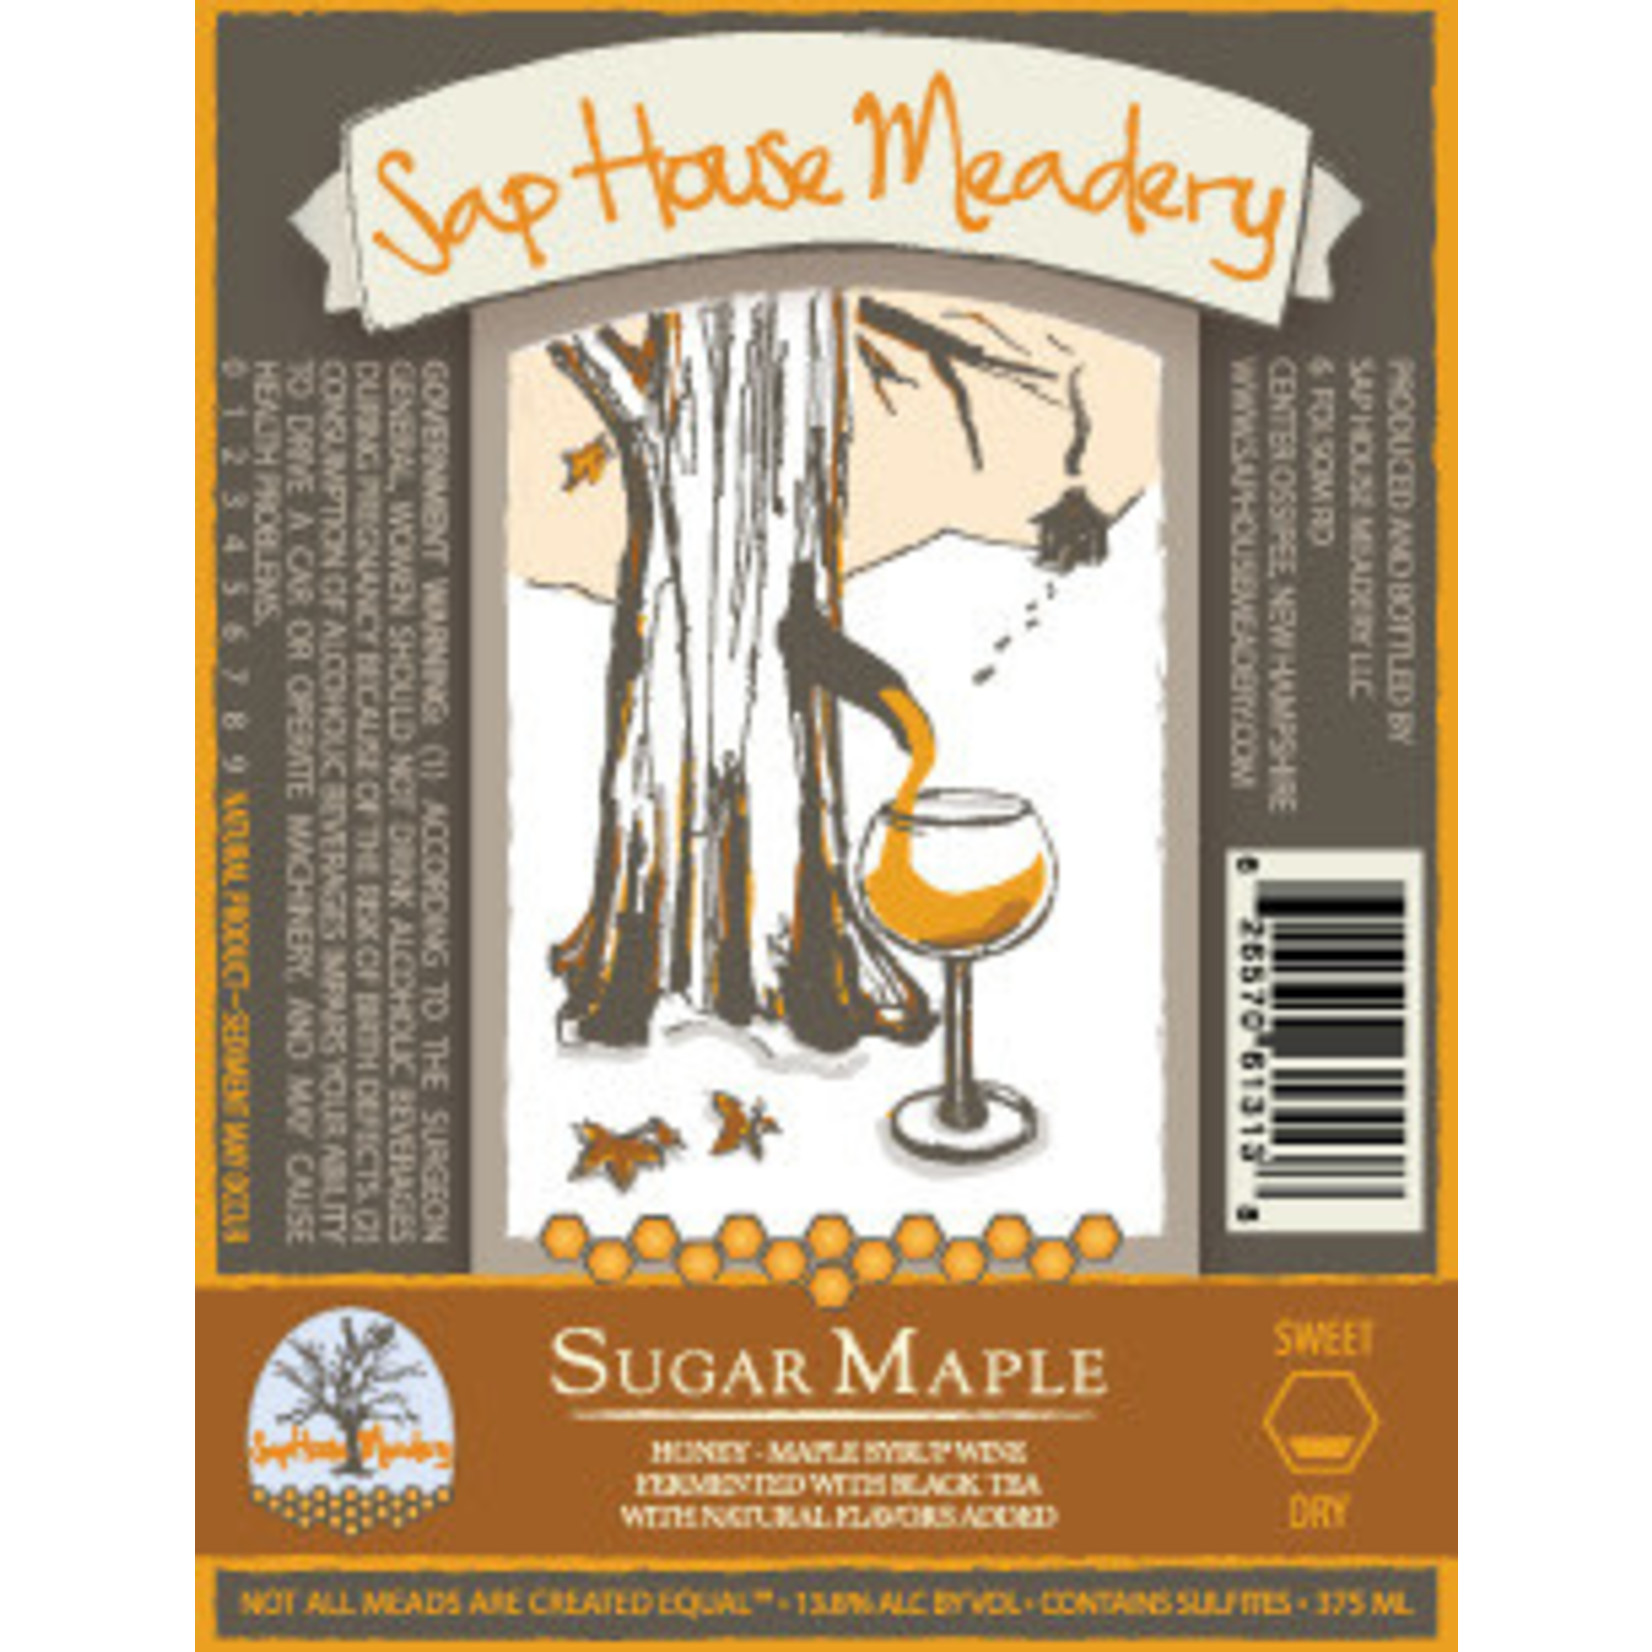 Sap House Meadery Sugar Maple Mead .375ml